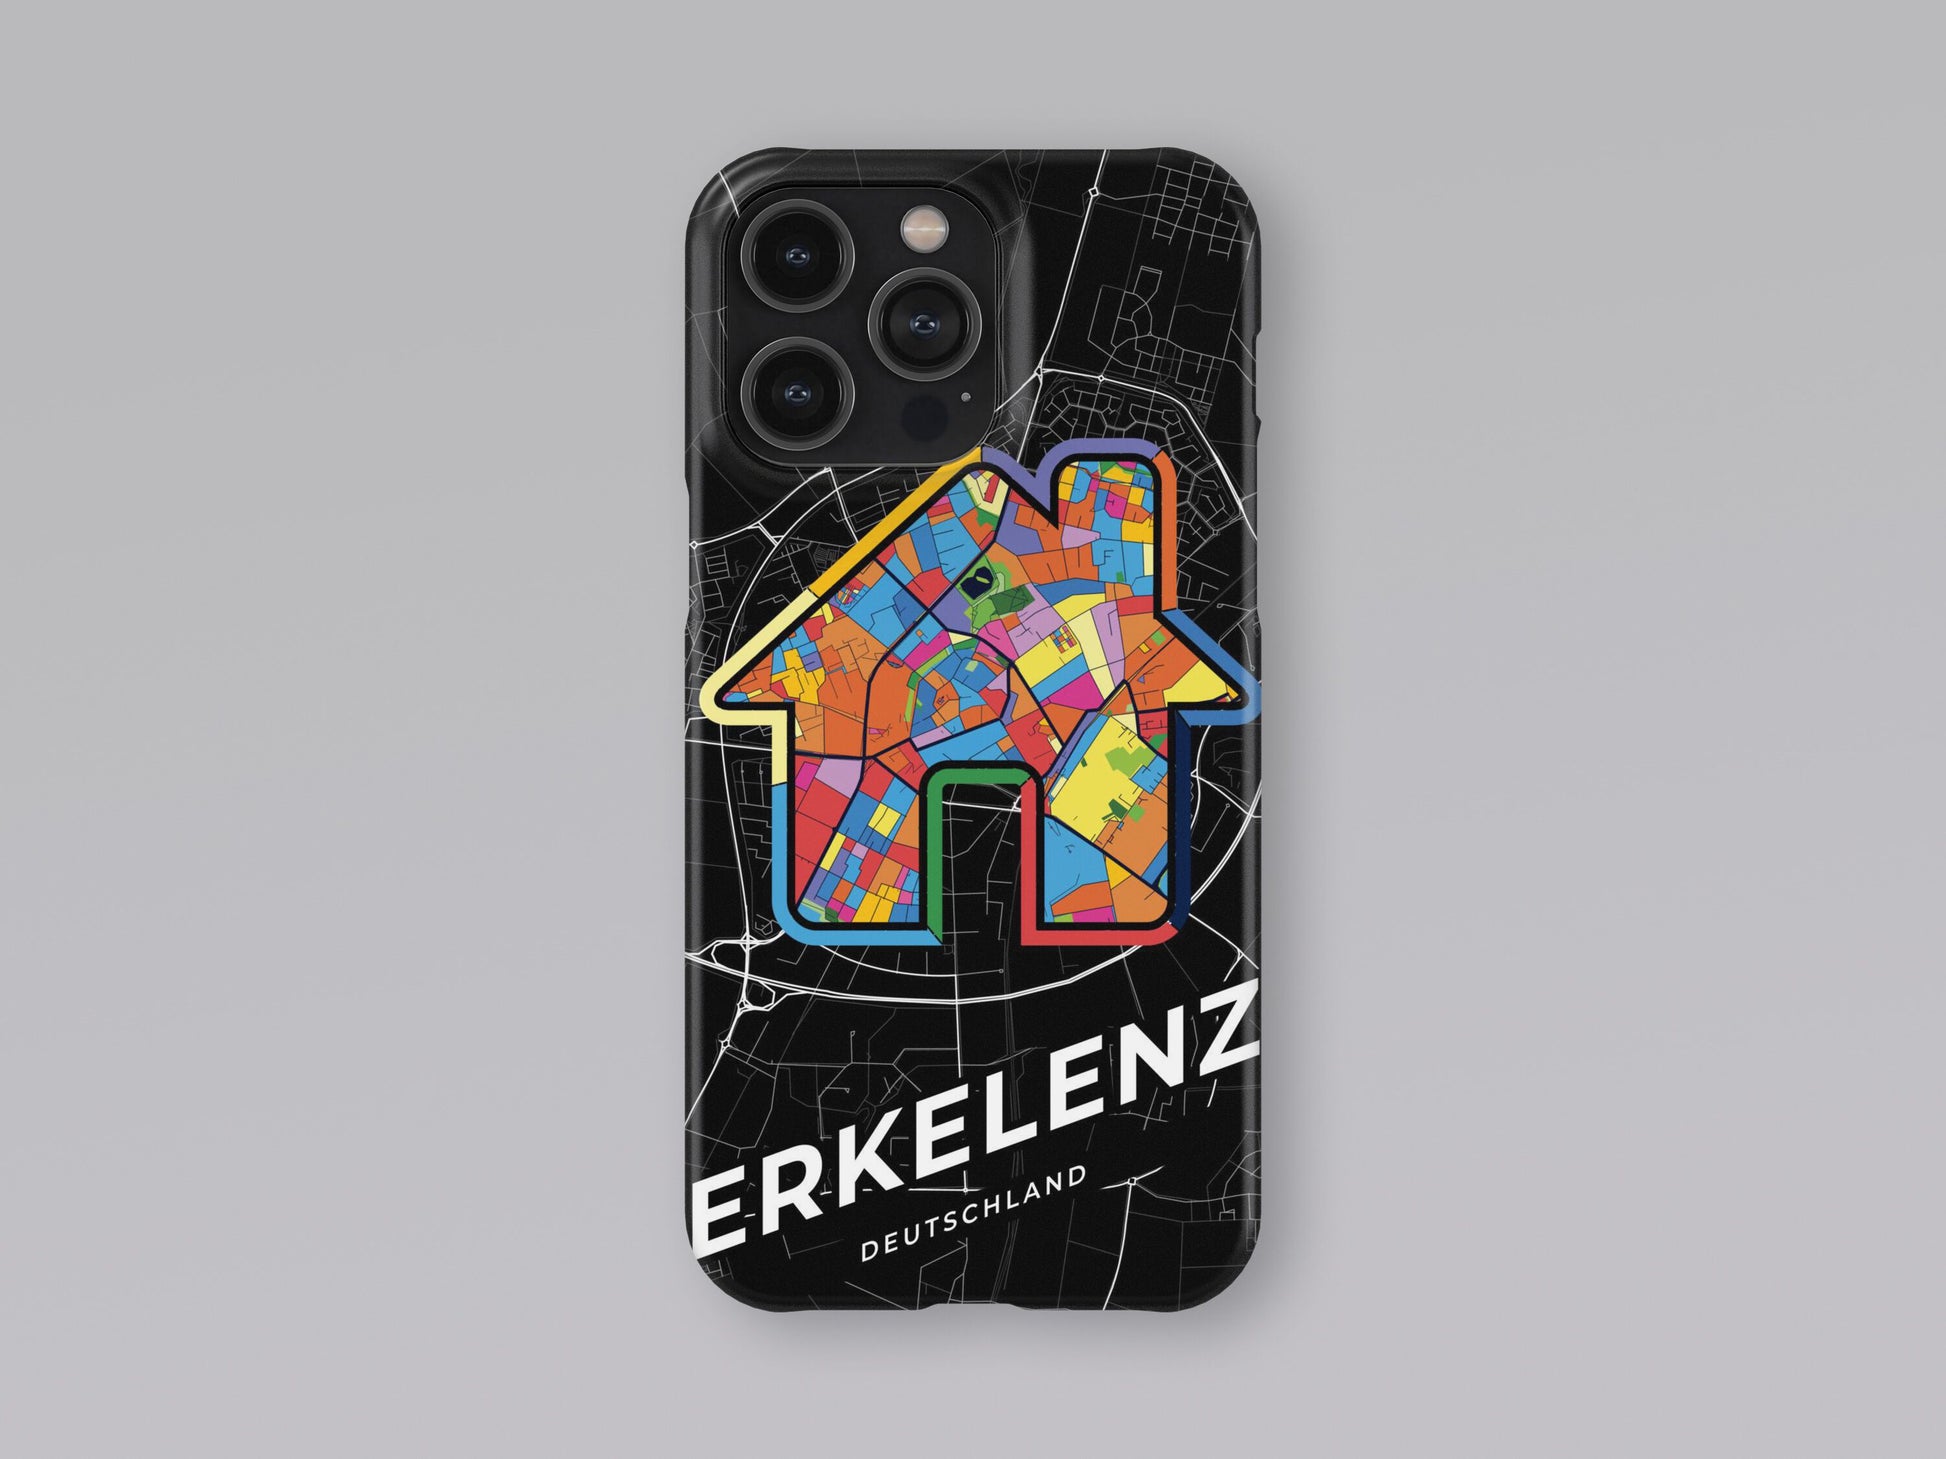 Erkelenz Deutschland slim phone case with colorful icon. Birthday, wedding or housewarming gift. Couple match cases. 3